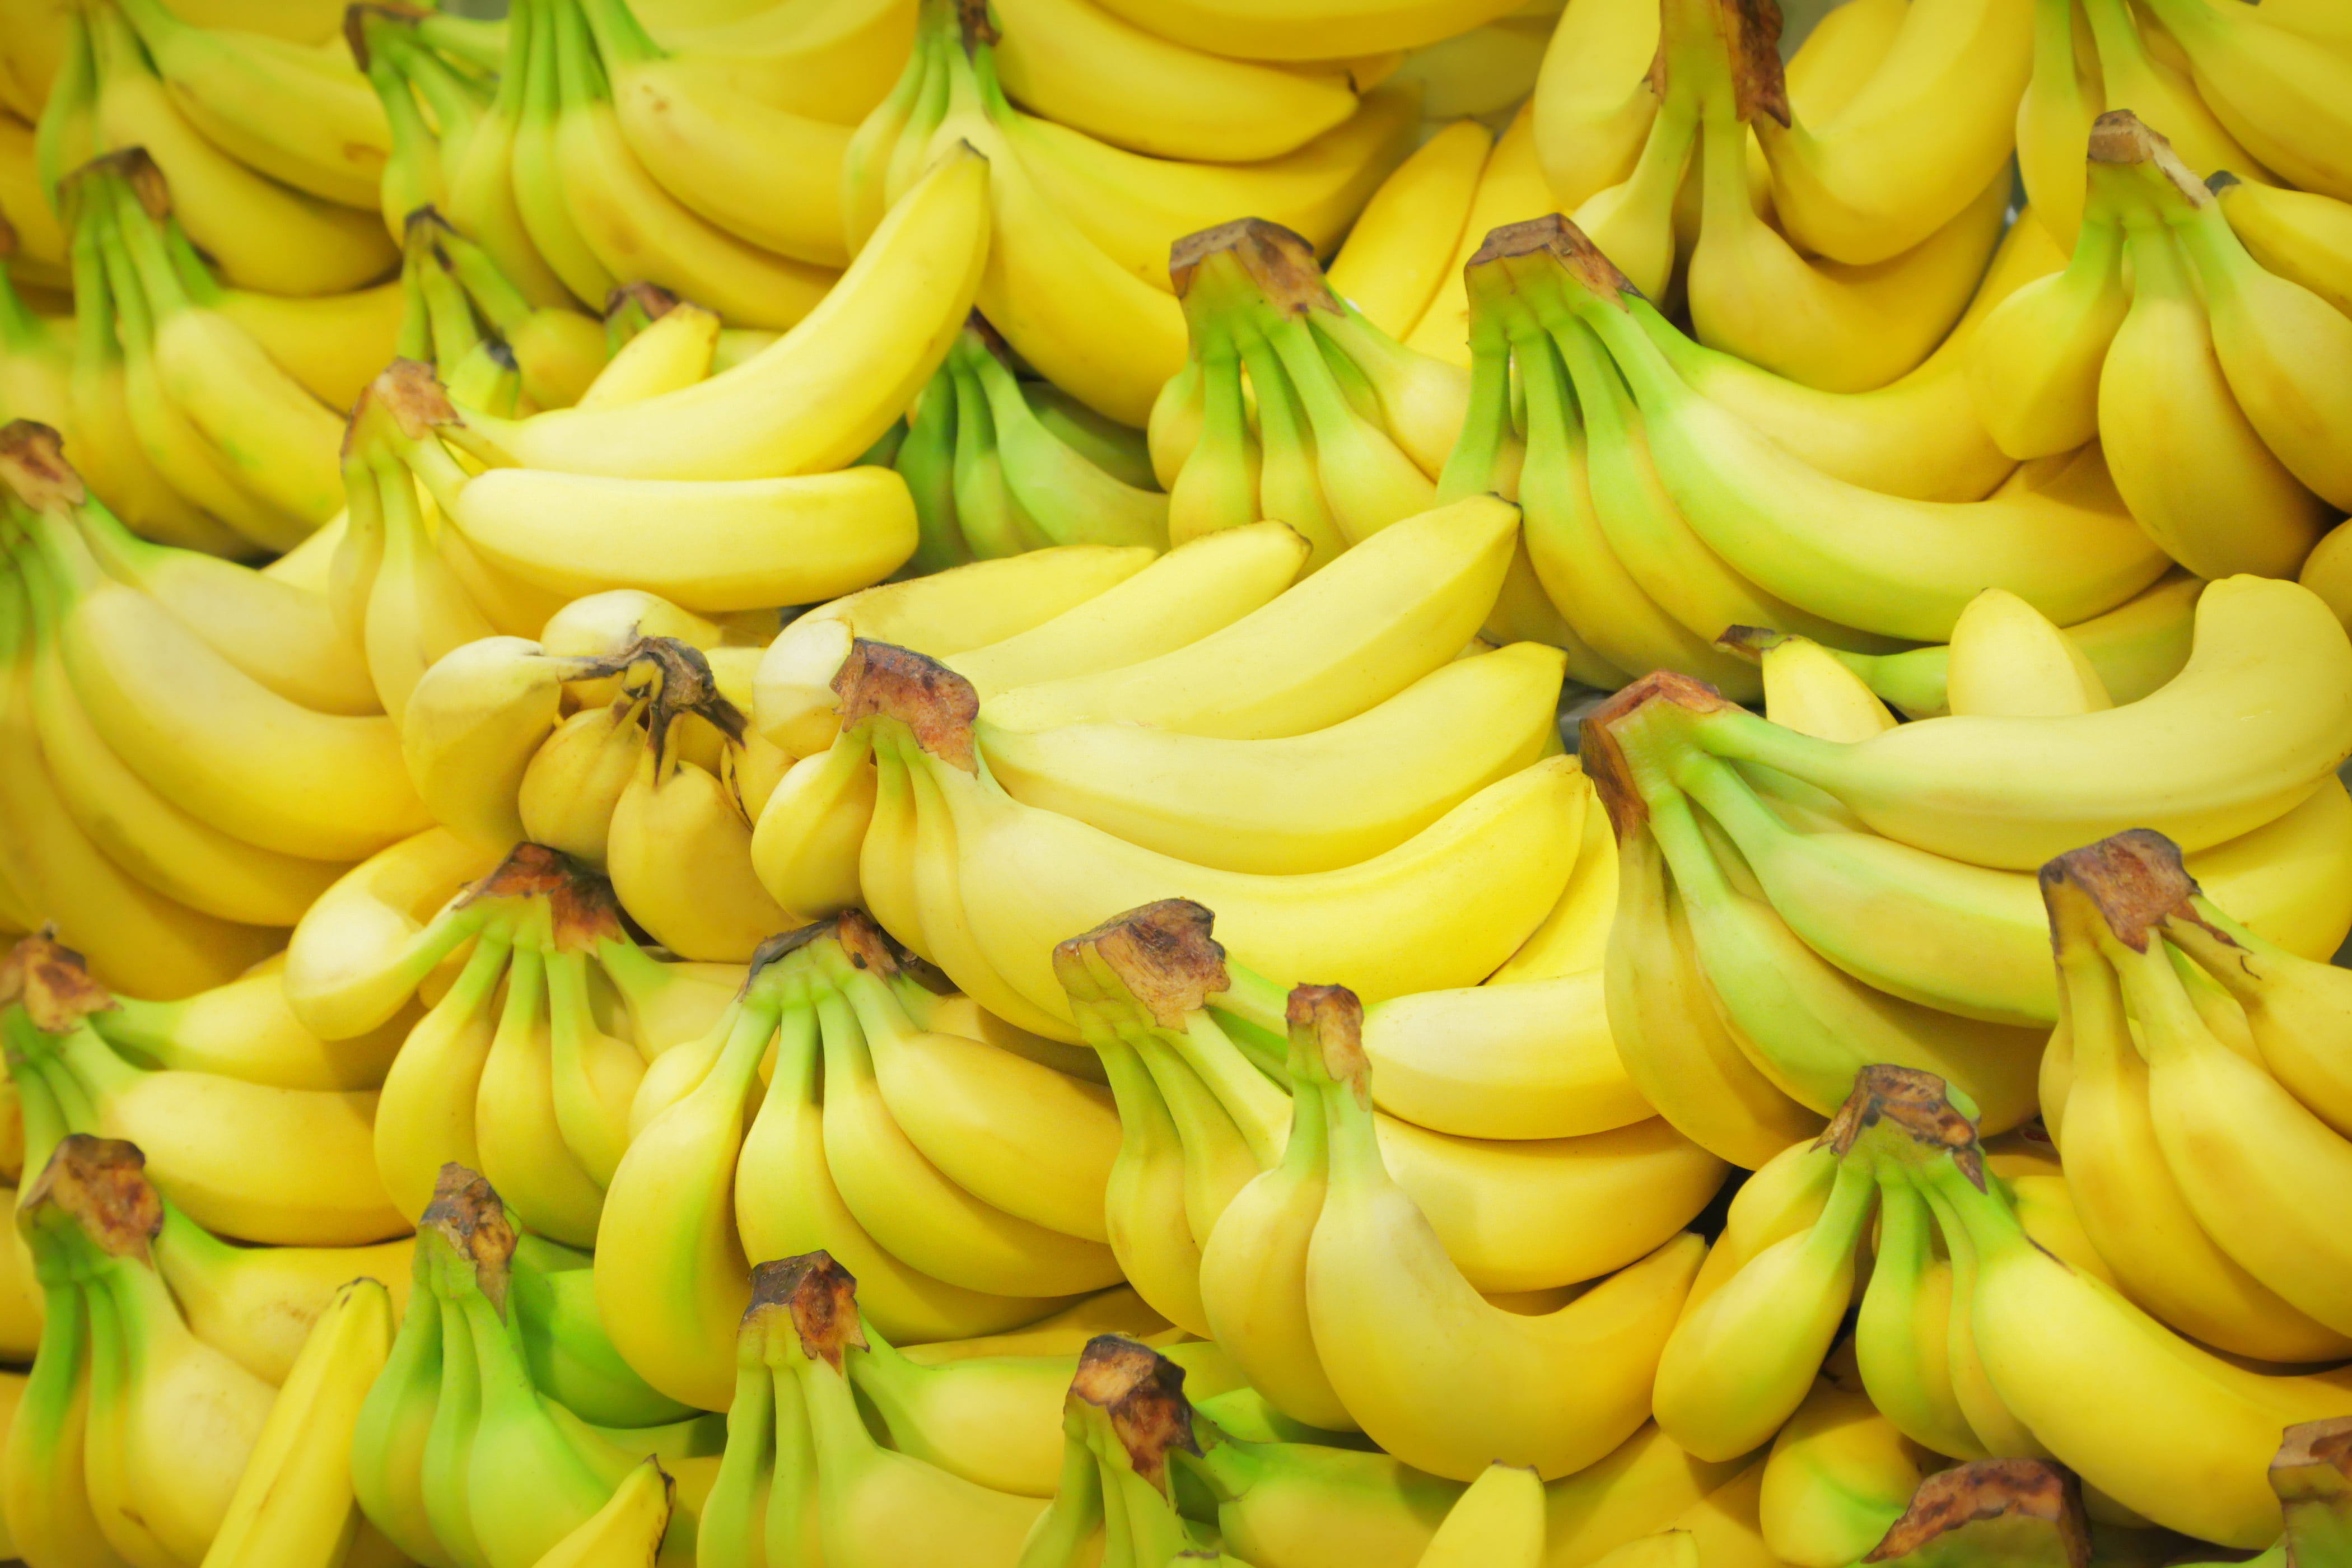 riped banana lot, texture, Fruit, Bananas, yellow, for sale, freshness